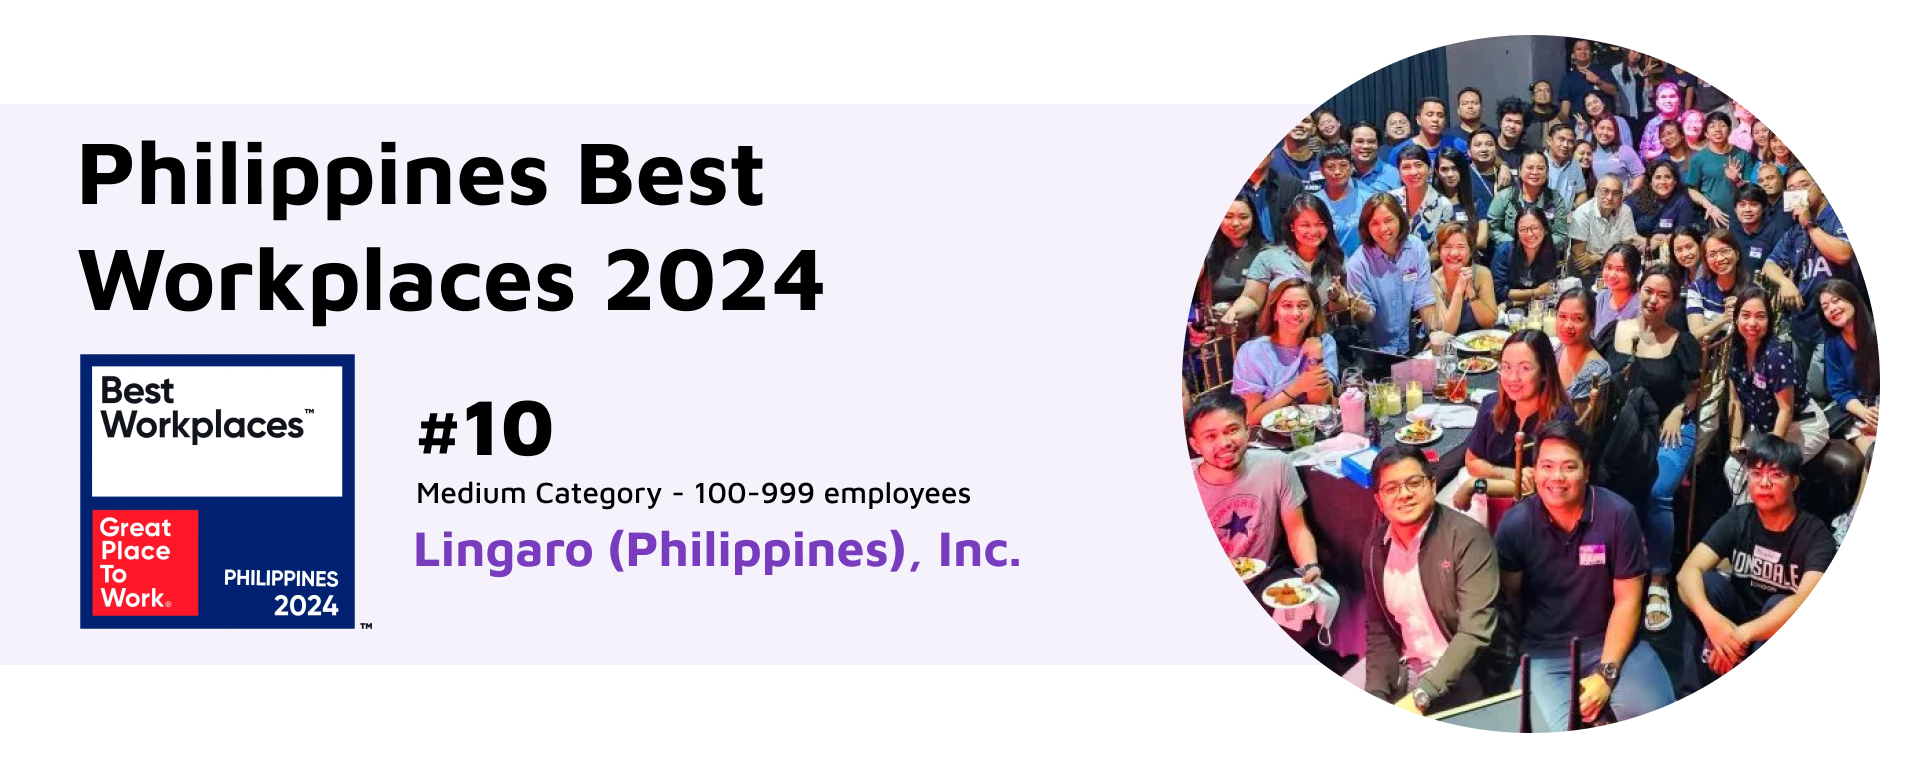 Philippines Best Workplaces 2024